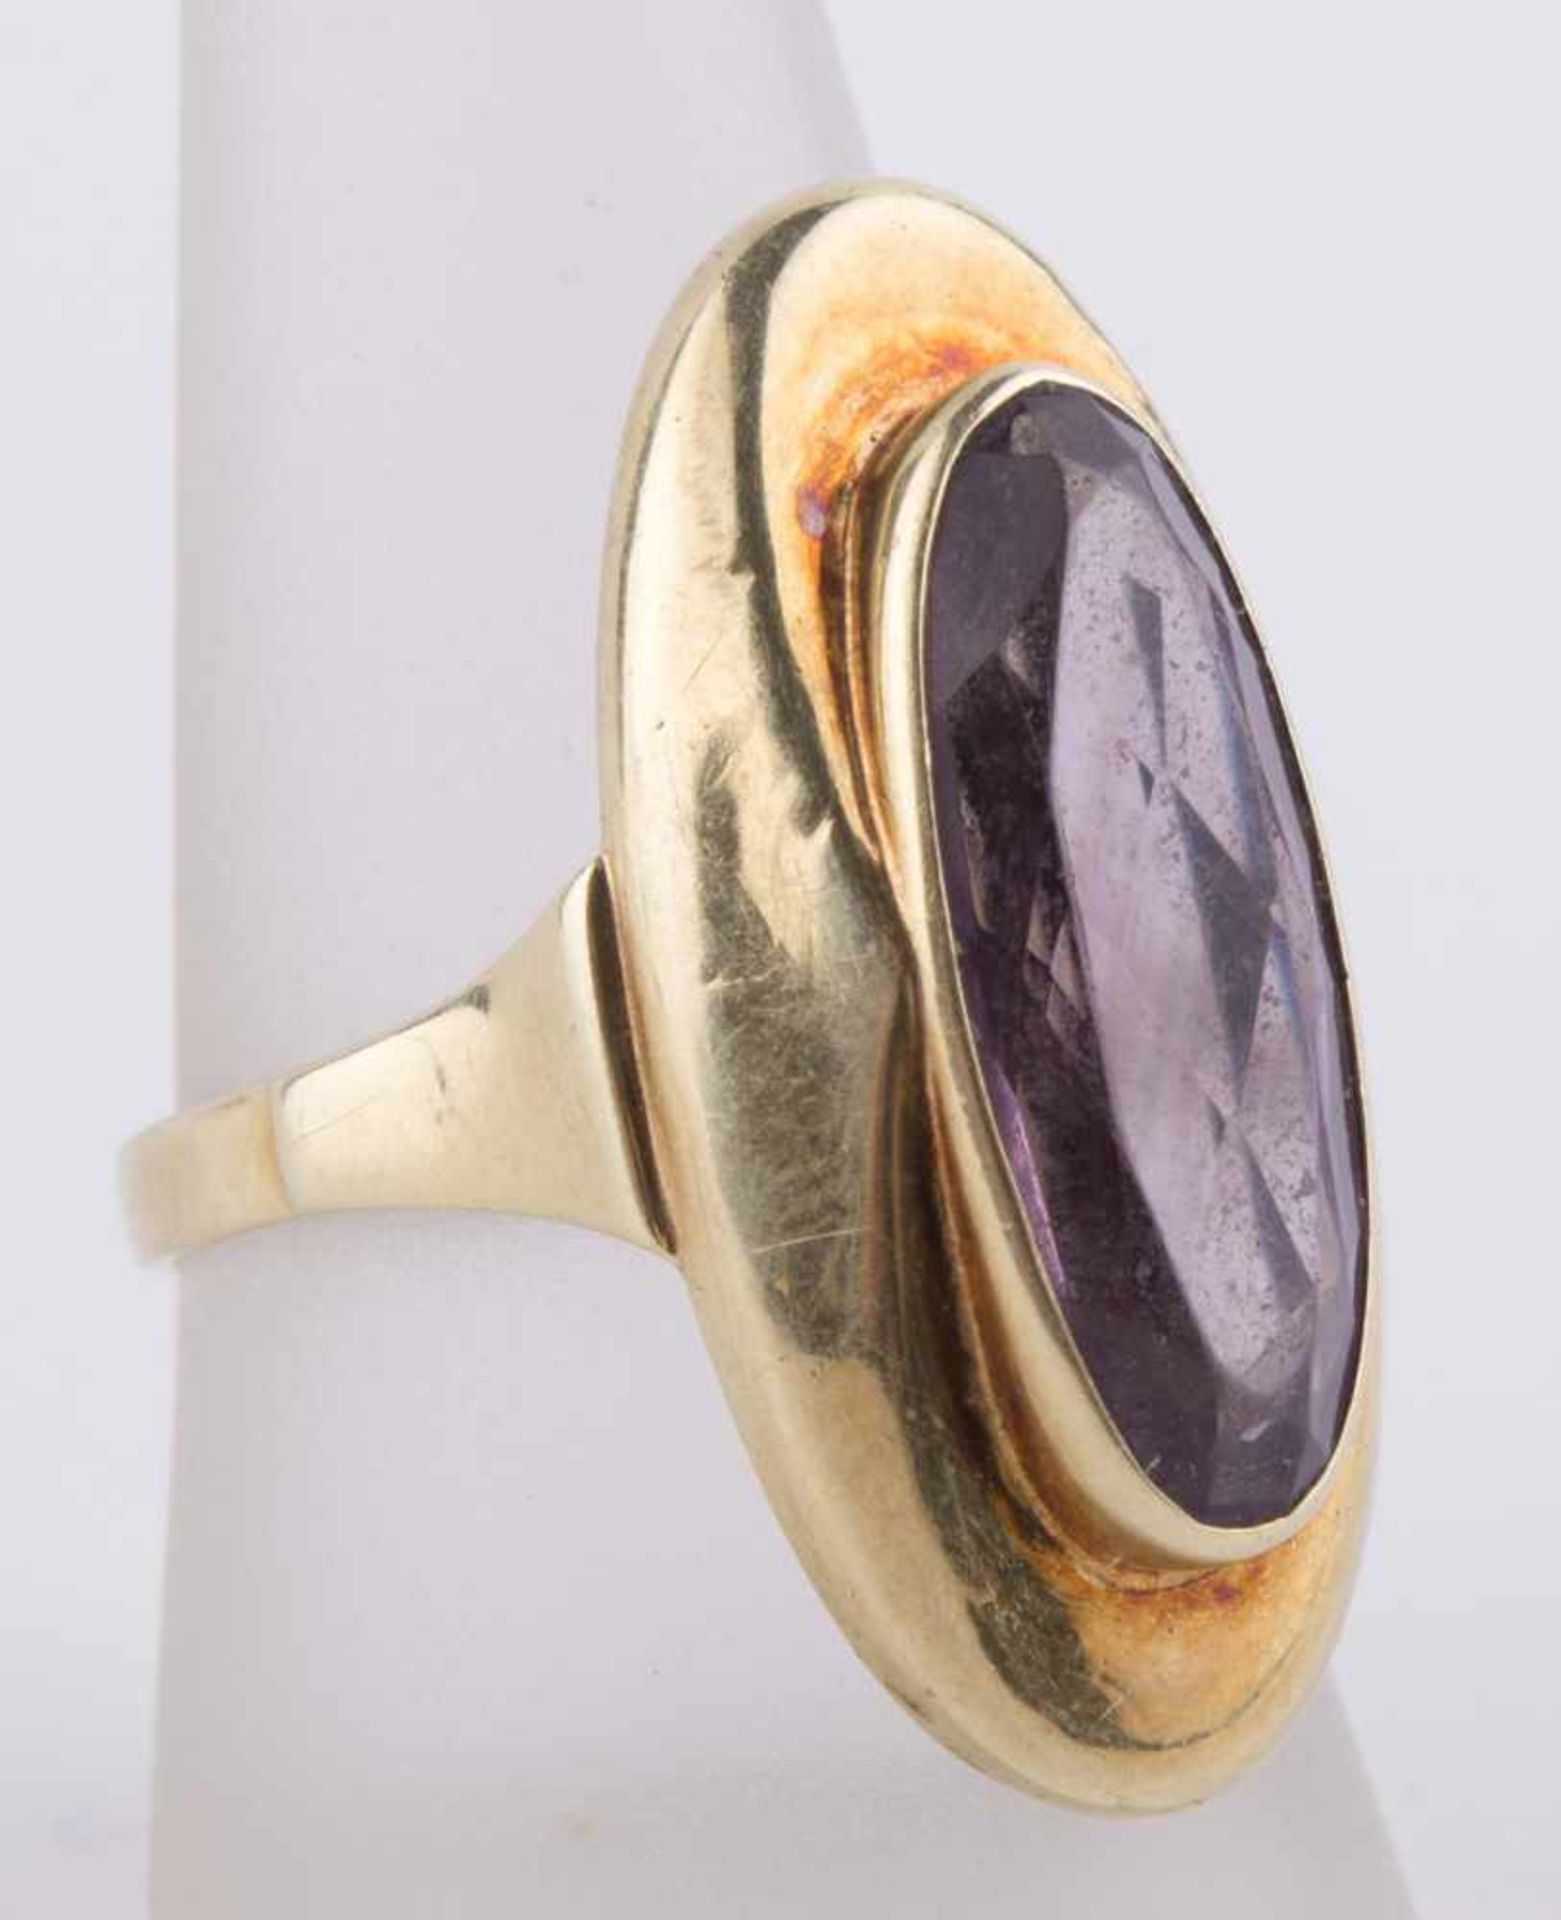 Damen Amethystring / Women's amethyst gold ring GG 585/000, RG ca. 58, Gesamtgewicht ca. 6 g. - Bild 4 aus 12